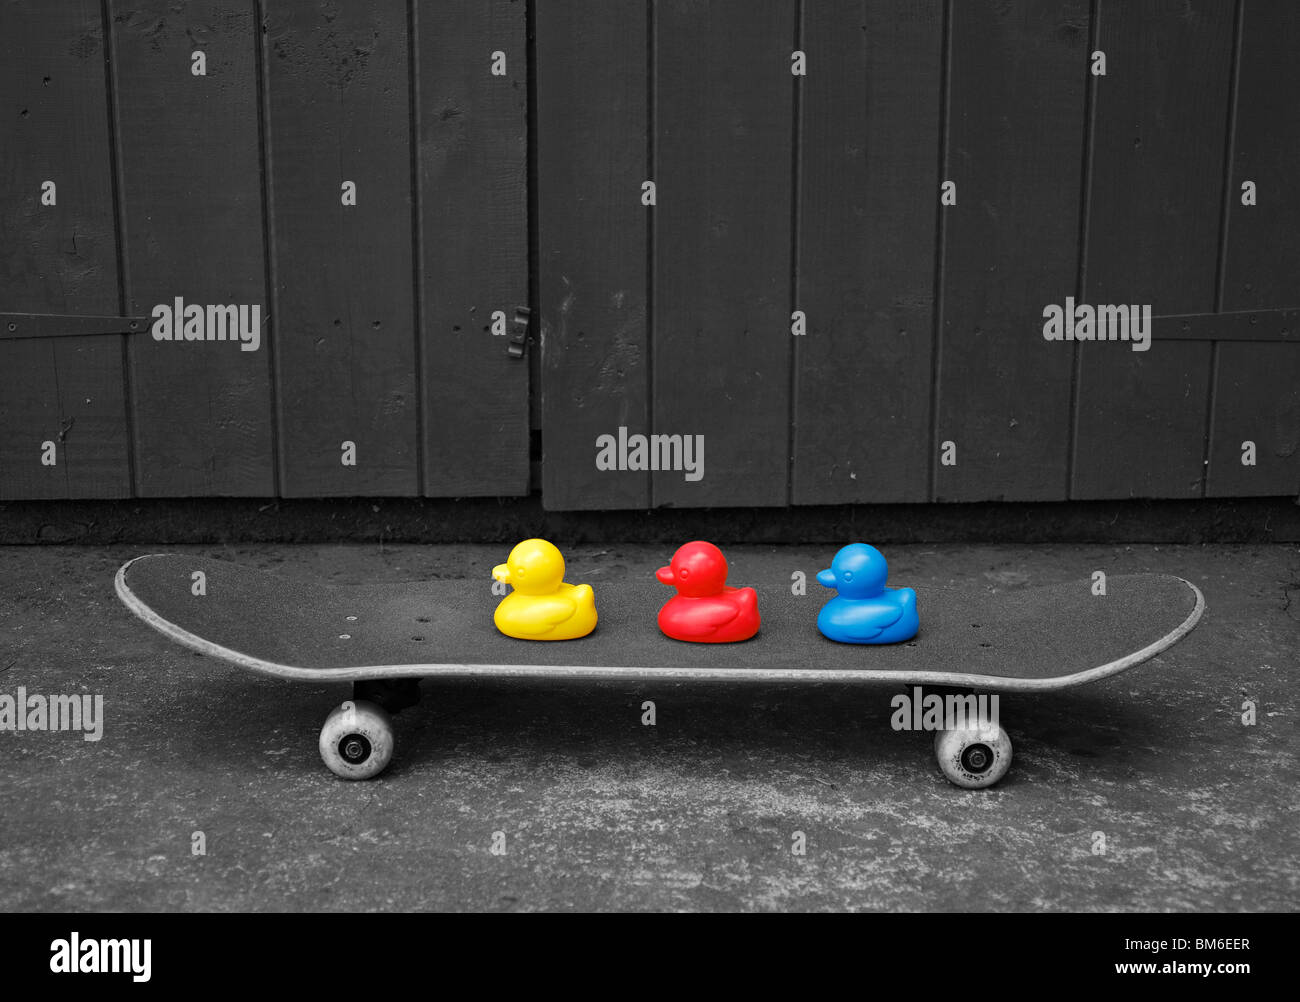 Toy ducks on a skateboard. Stock Photo